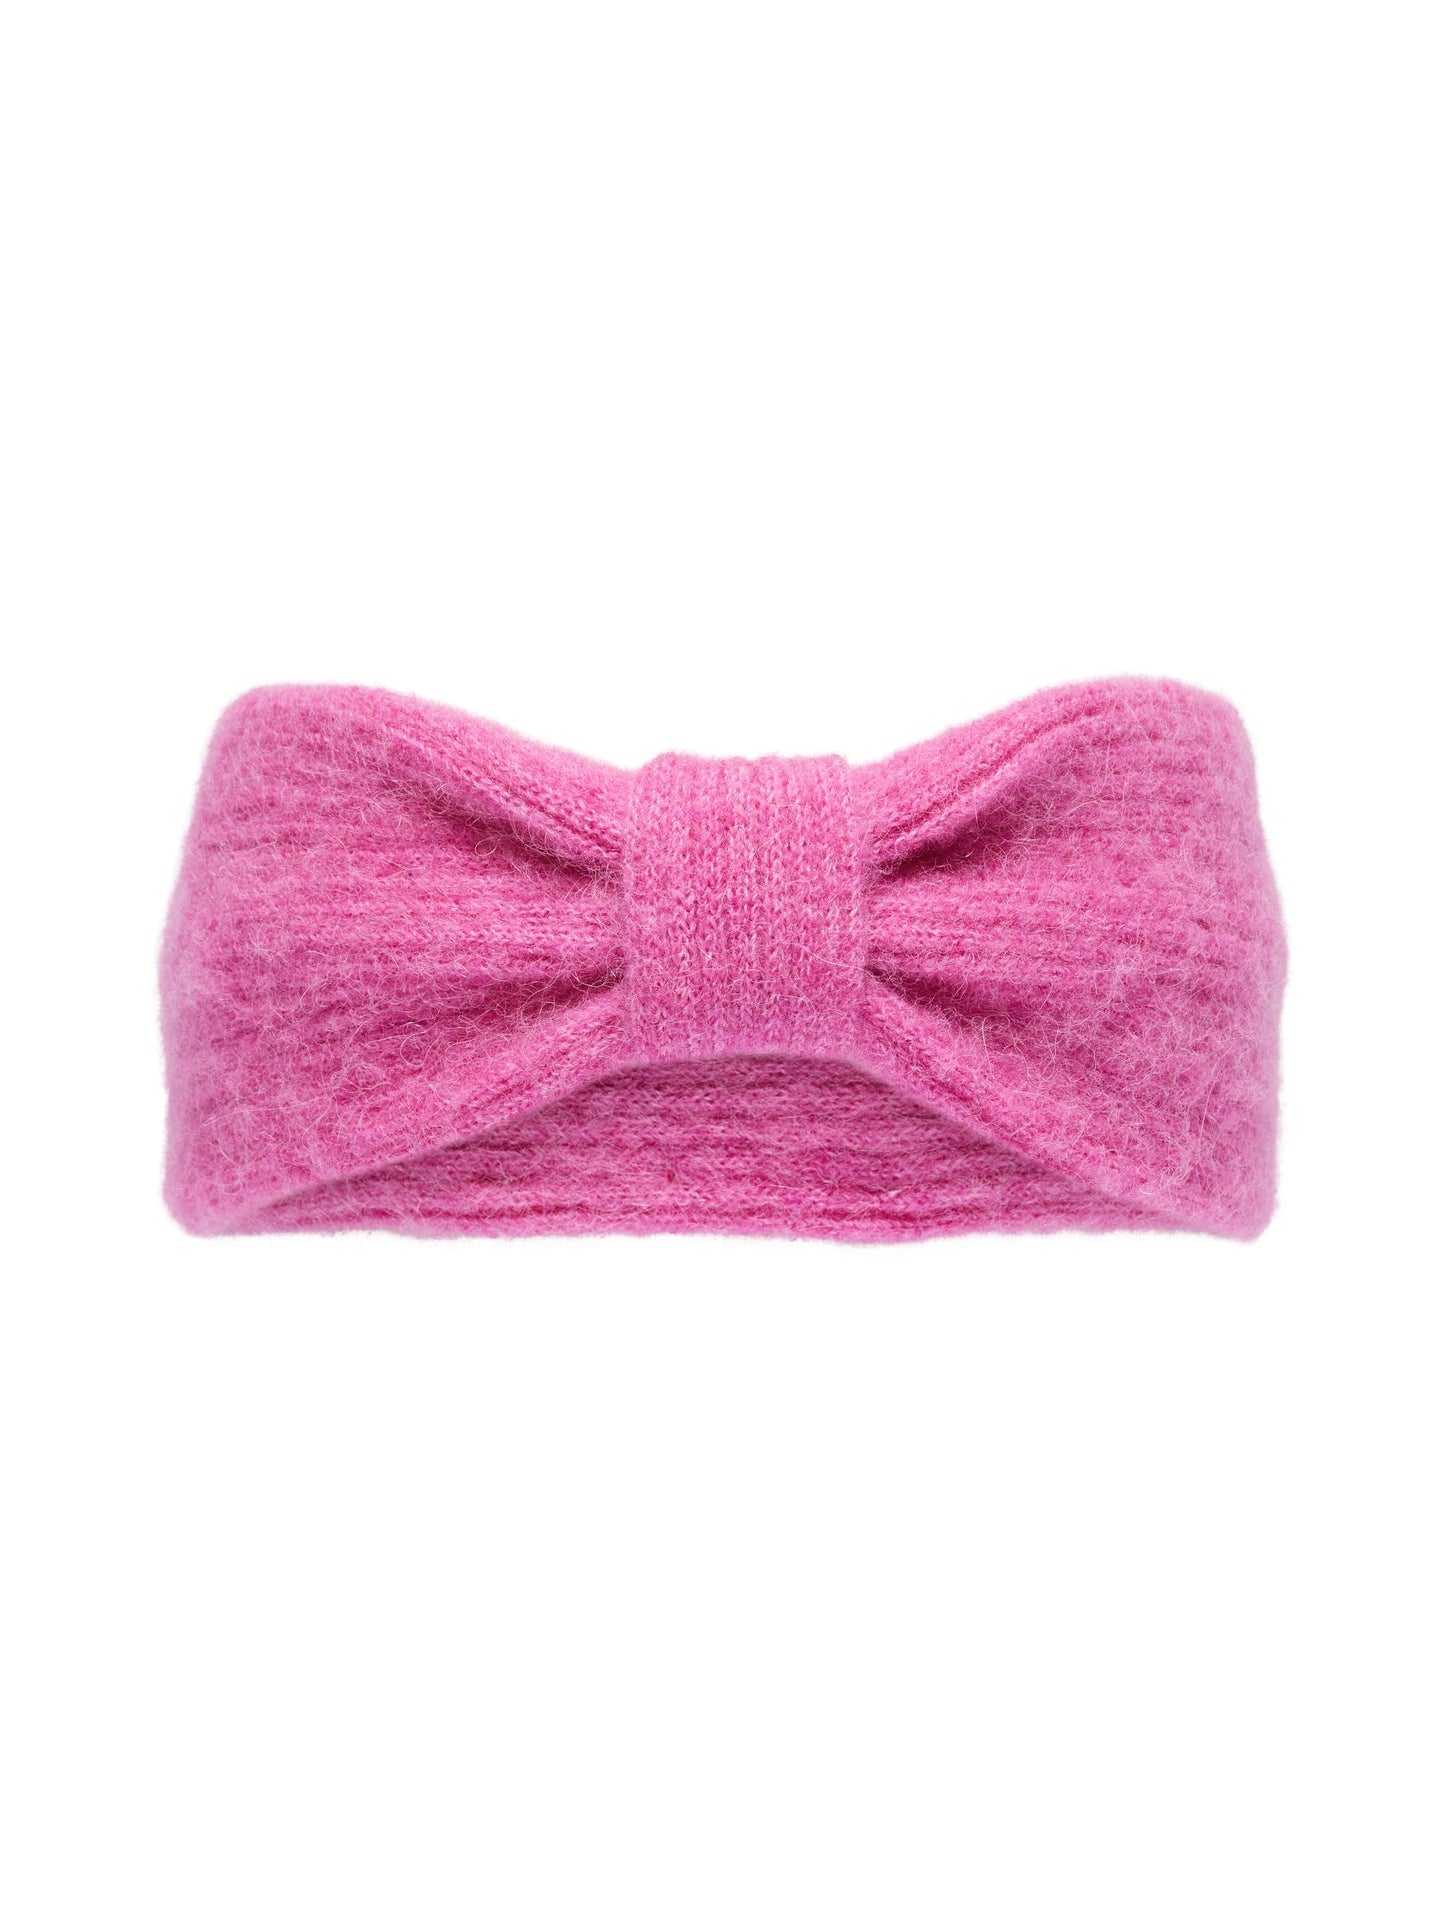 Lulu Linna Knit Headband - Phlox Pink